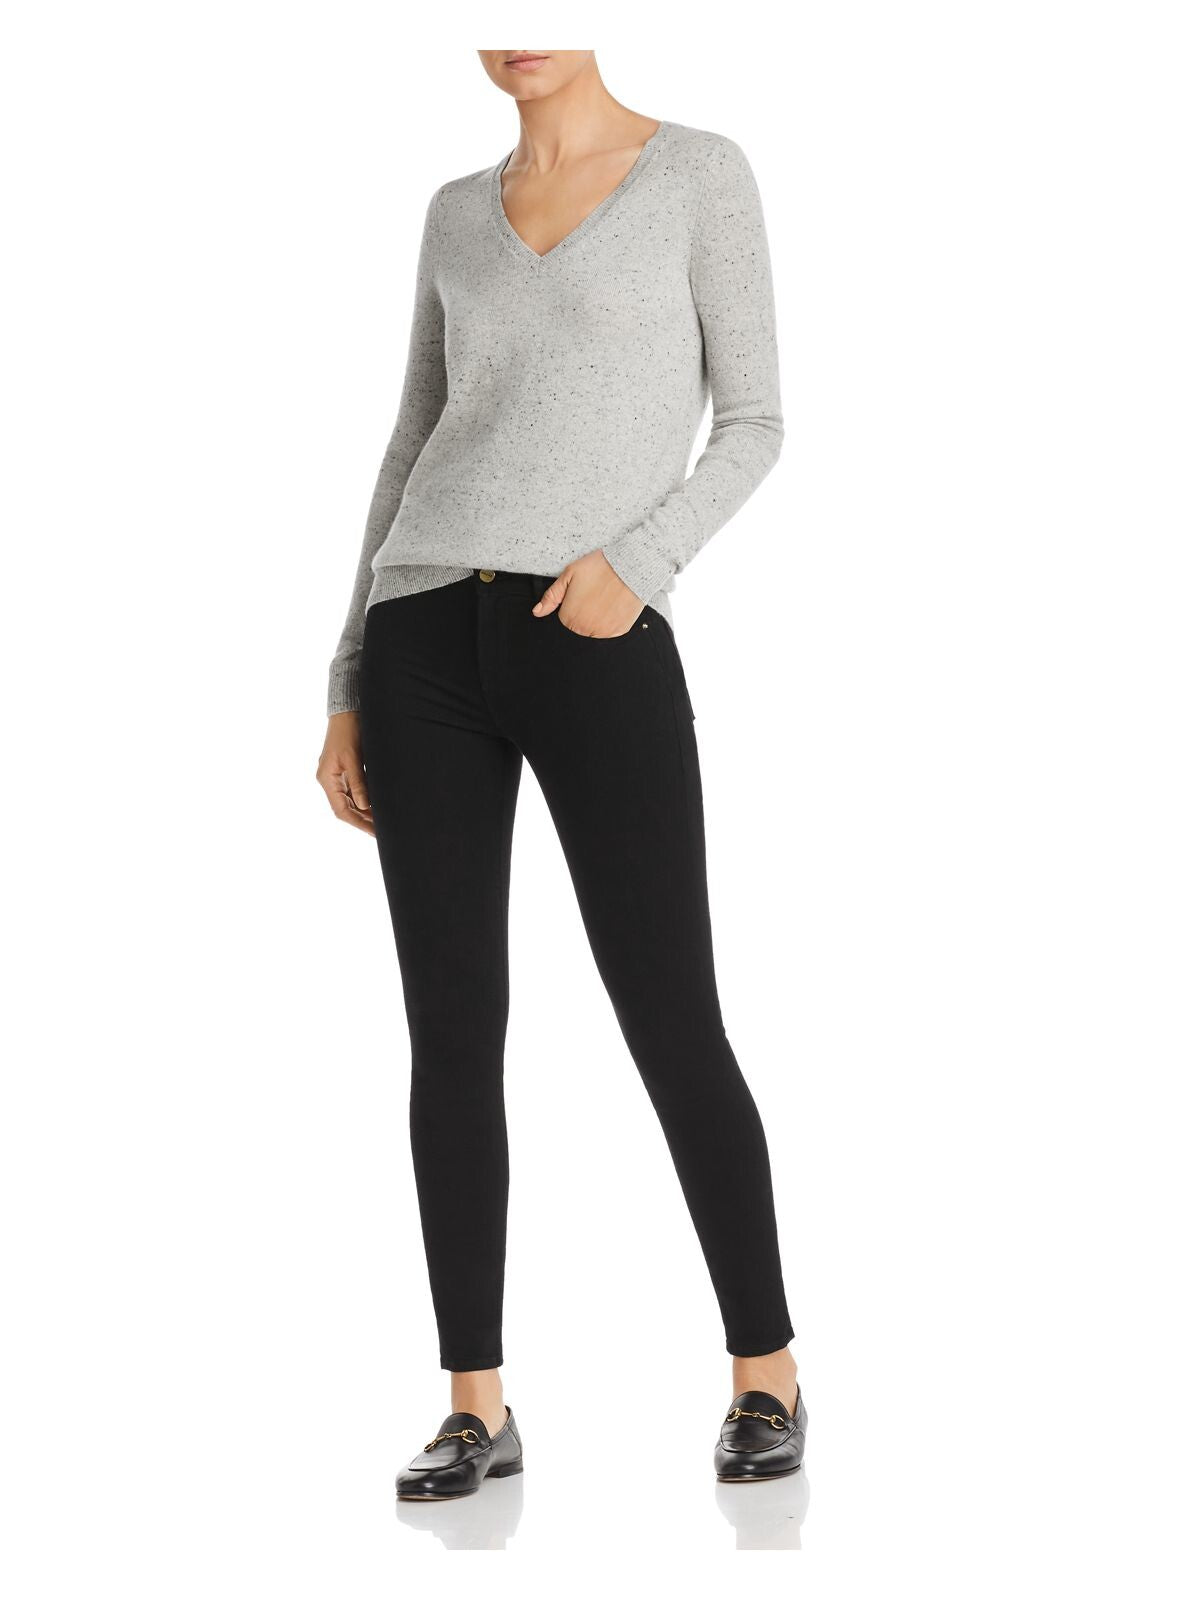 Designer Brand Womens Gray Heather Long Sleeve V Neck Blouse XL